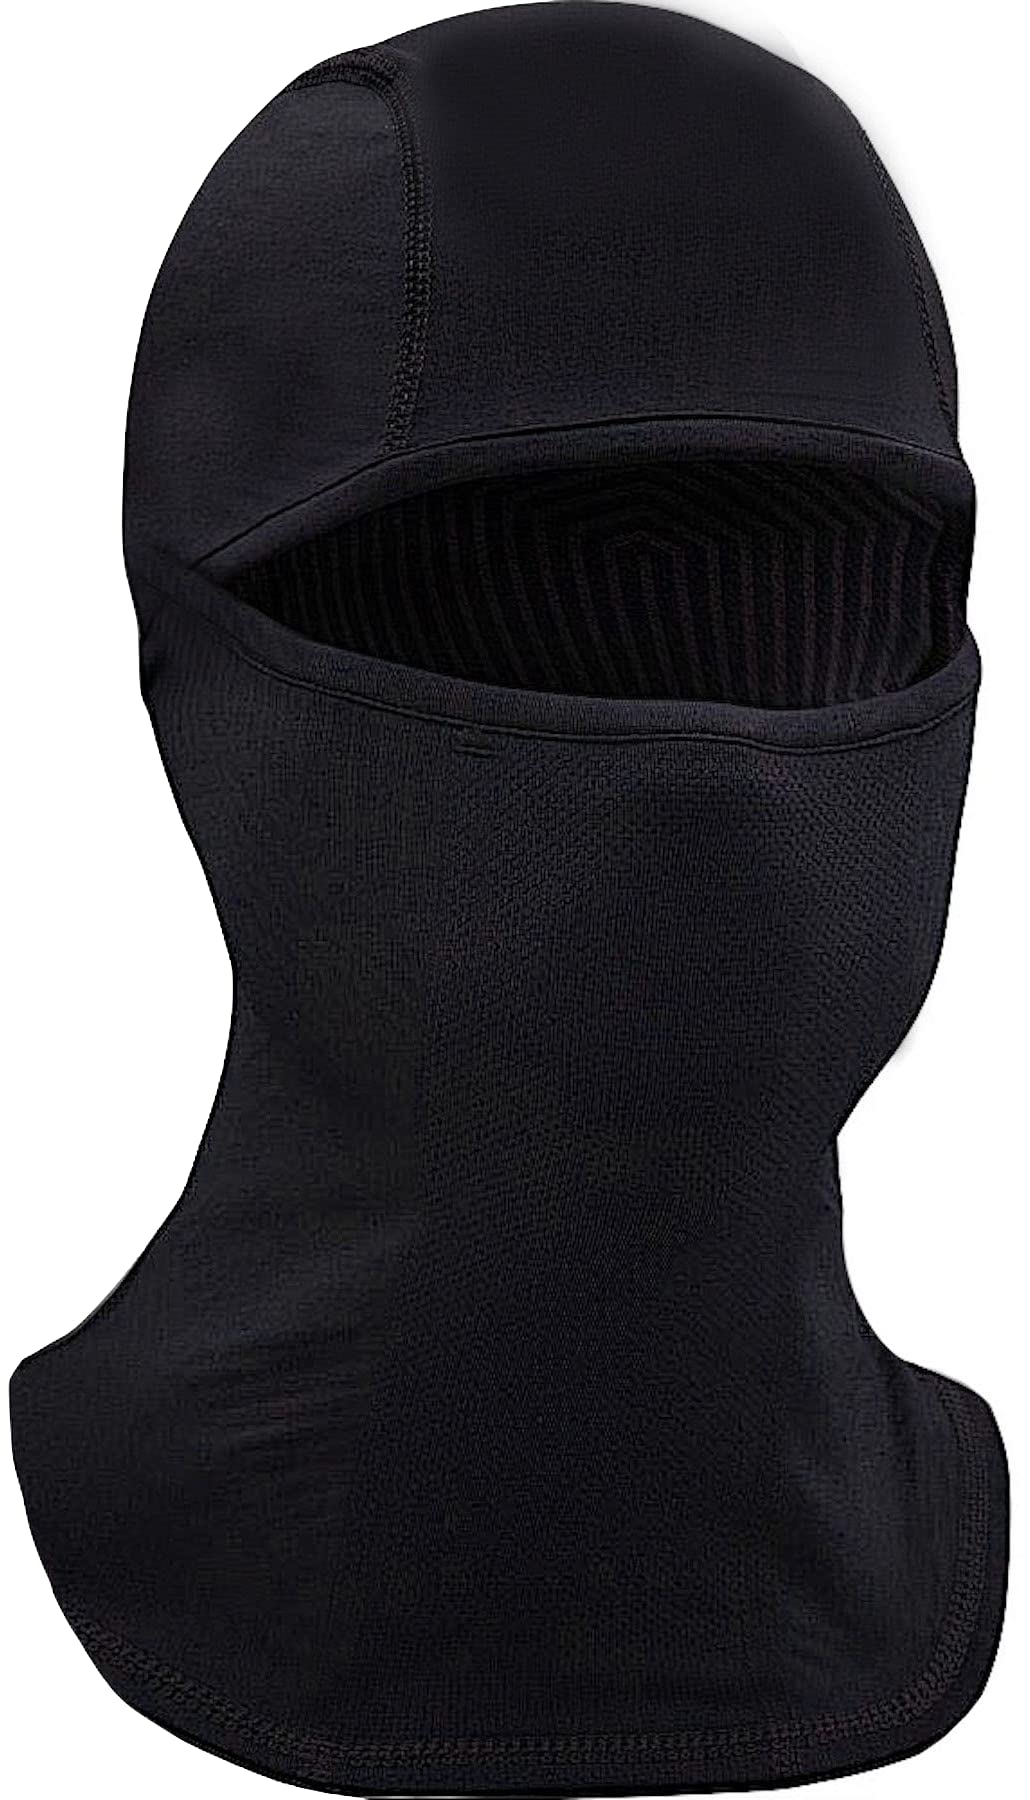 Ski Mask for Men Women Balaclava Windproof Cold Weather Full Face Masks Neck Warmer or Tactical Balaclava